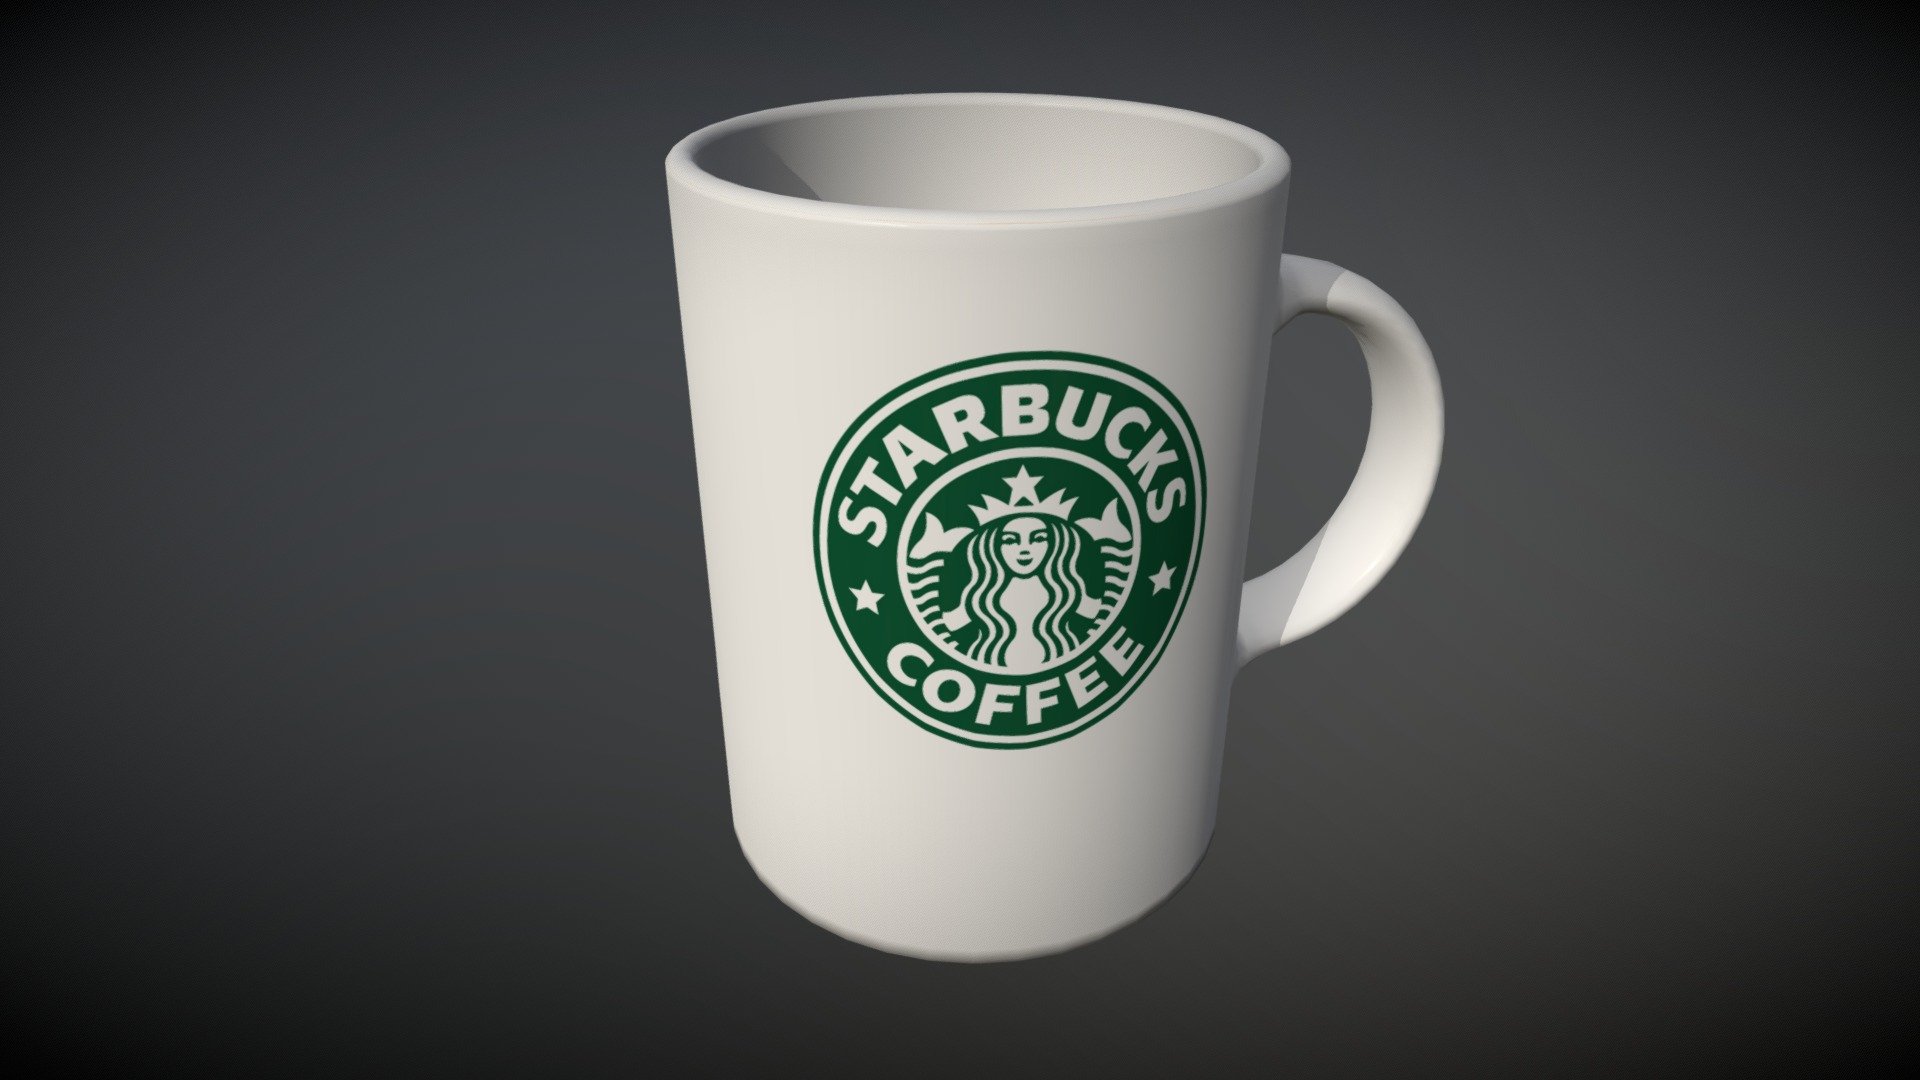 Starbucks Coffee Mug.  Download includes Maya file and FBX 3d model